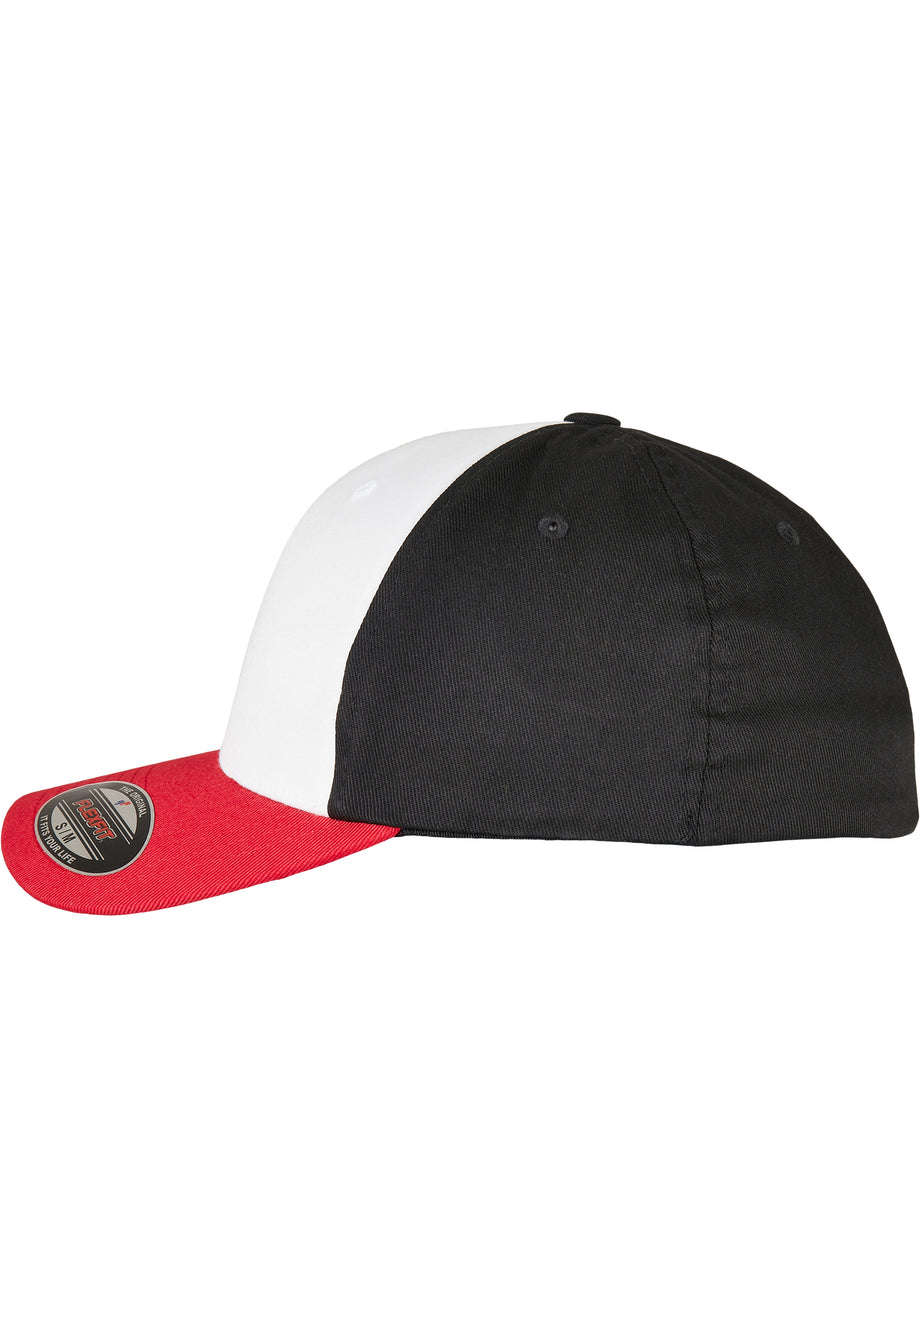 COMBED 3 6277TT CAP WOOLY TONE Red/White/Black Caps Flexfit